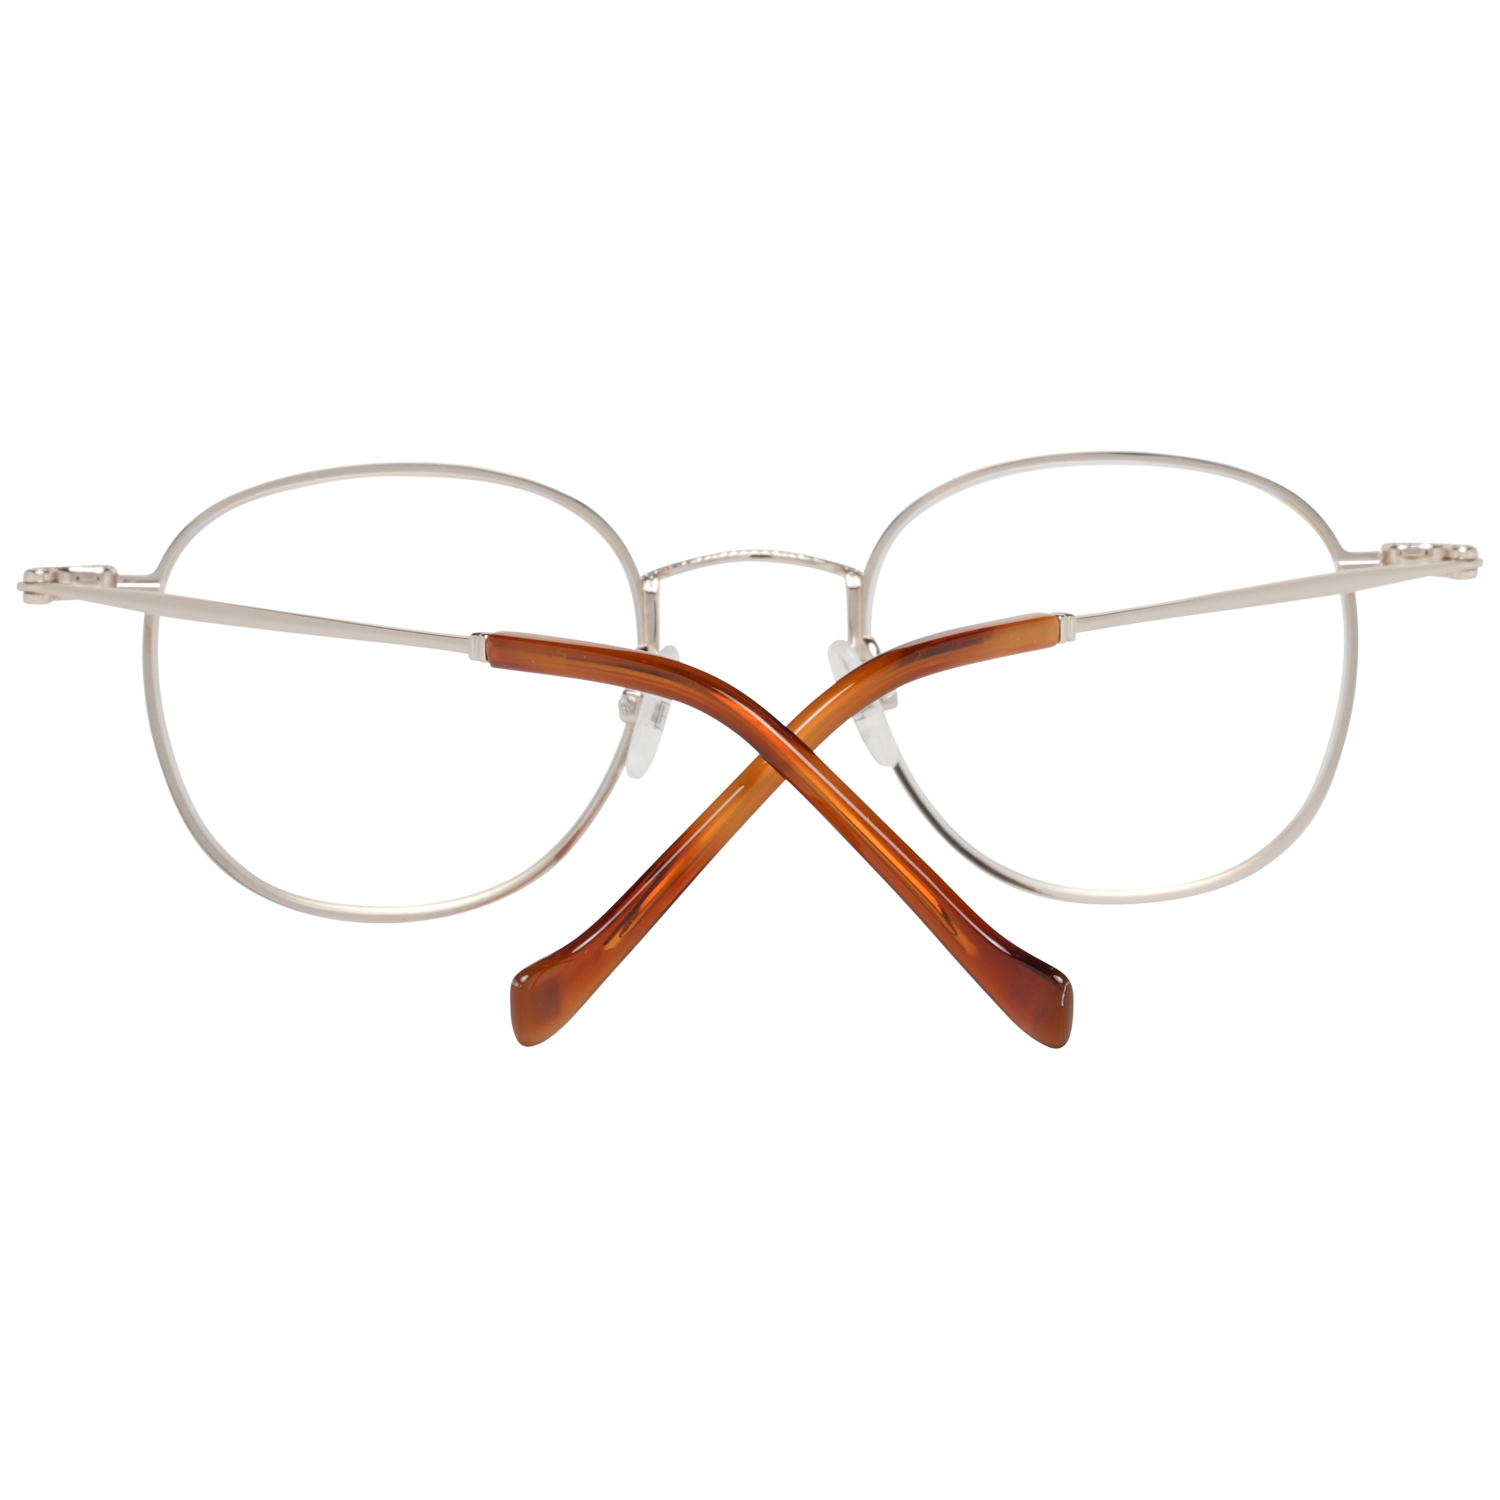 Hackett Frames Hackett Bespoke Glasses Optical Frame HEB242 400 48 Eyeglasses Eyewear UK USA Australia 